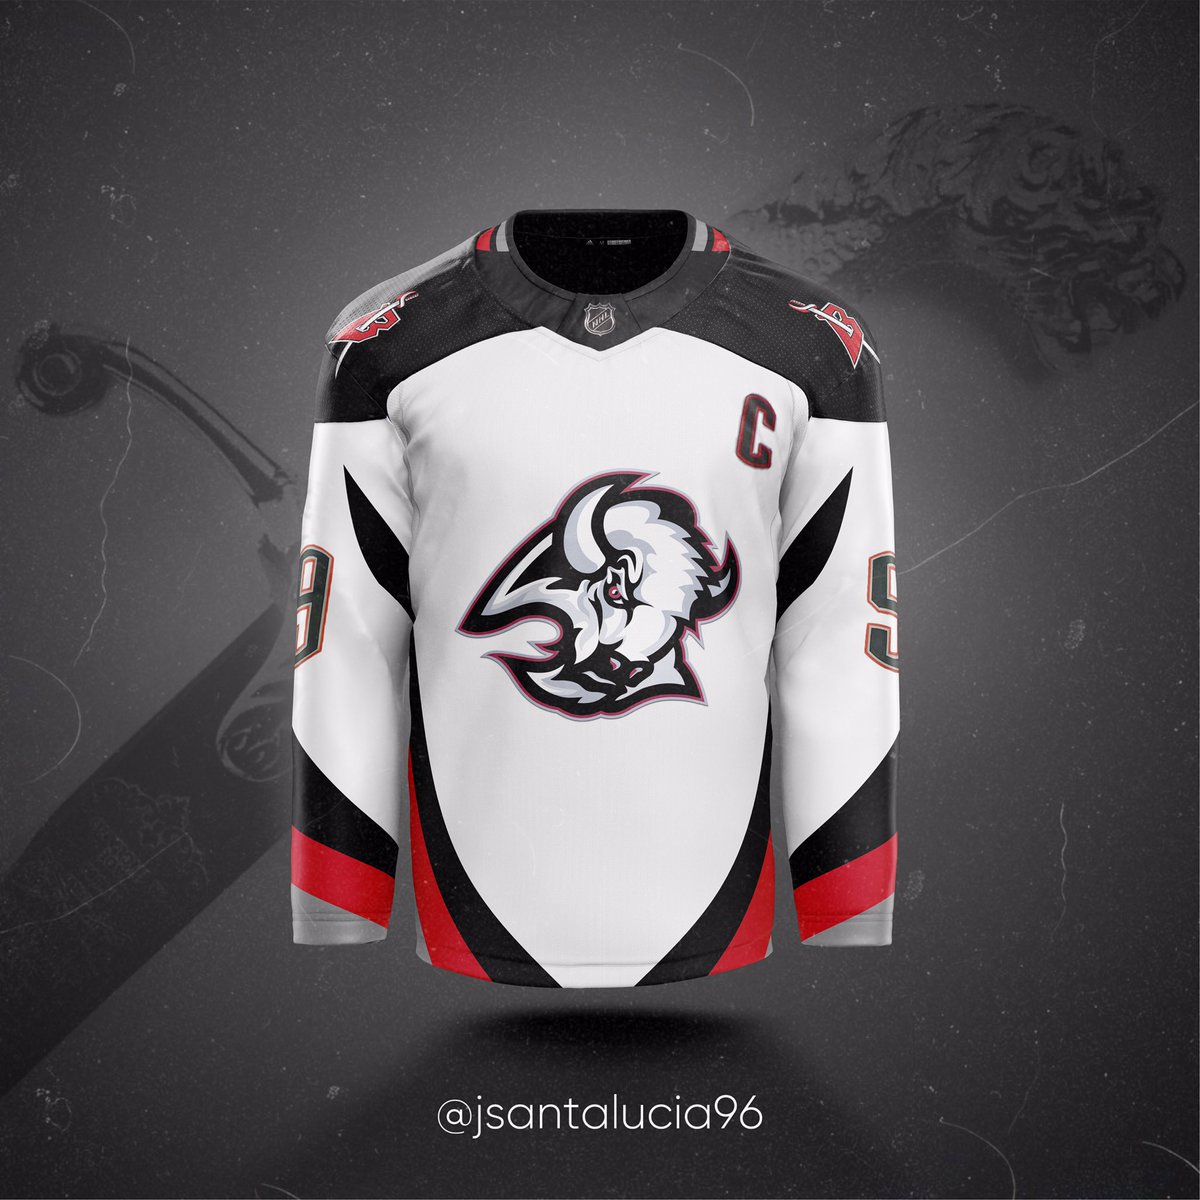 Jordan Santalucia on X: Buffalo Sabres 2018 Winter Classic concept jersey.  @BuffaloSabres @icethetics #BuffaloSabres #Sabres #WinterClassic  #FormTheFuture  / X